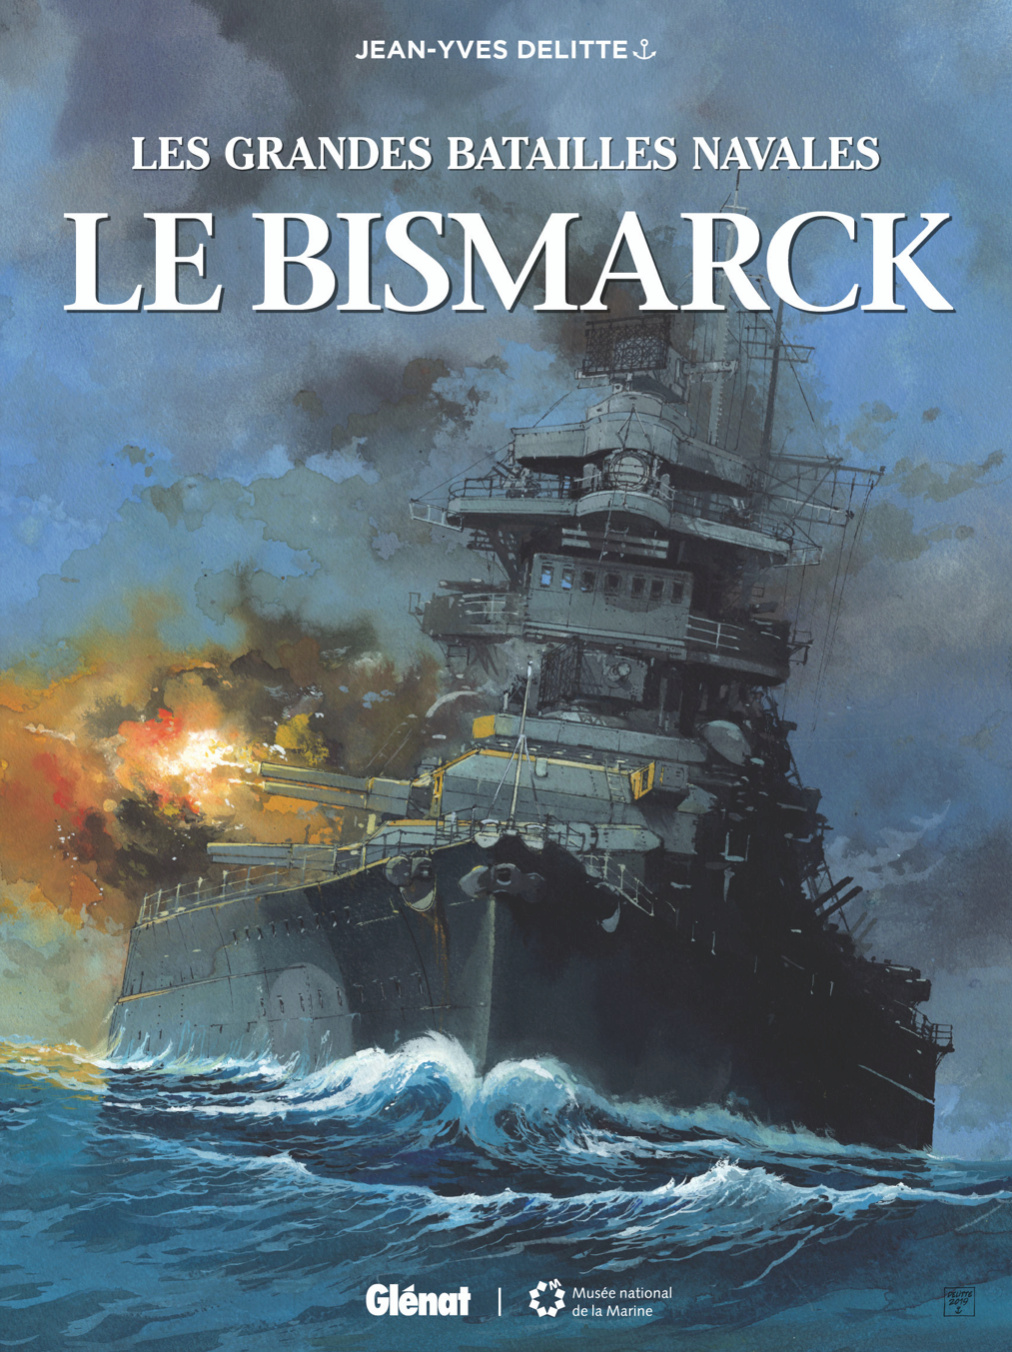 Cuirassé Bismarck [Trumpeter 1/200°] de Iceman29 - Page 6 Captur10